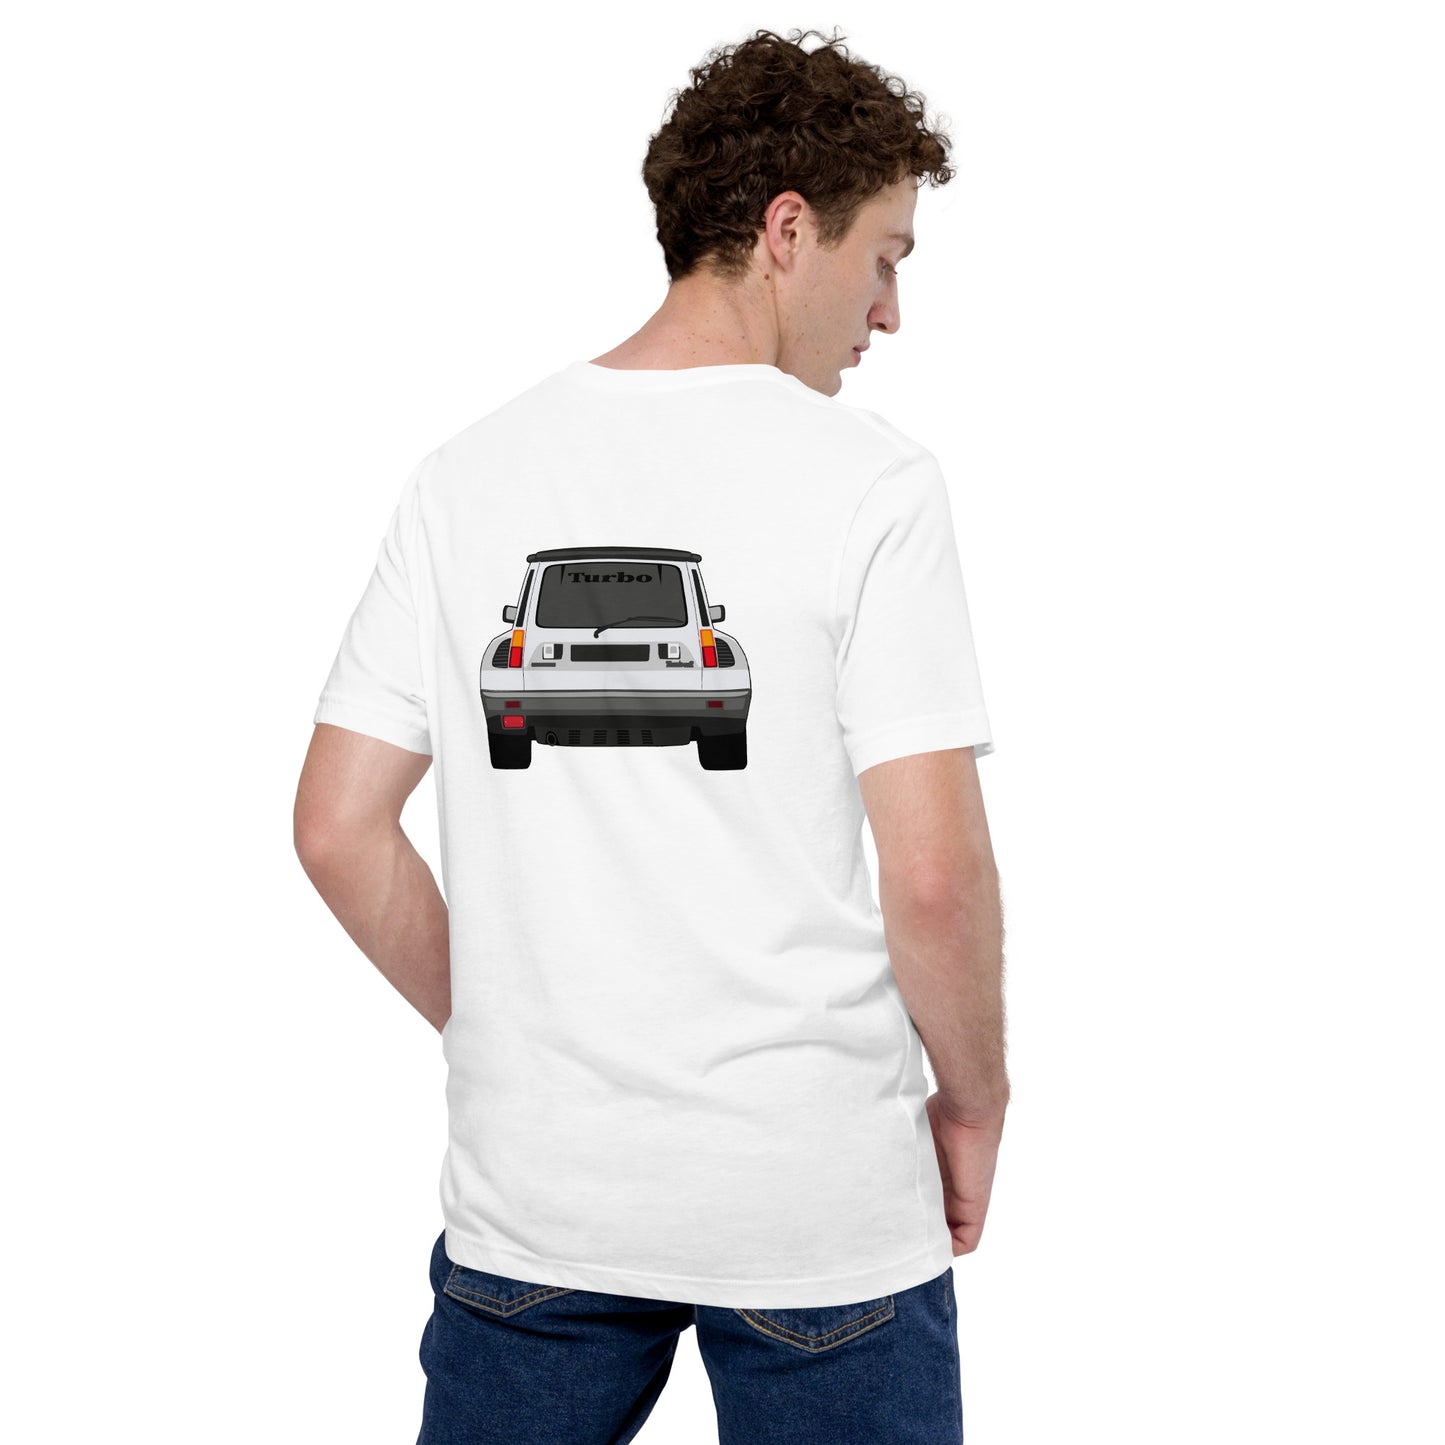 Camiseta unisex Renault Turbo "Garage Days" 1 of 100